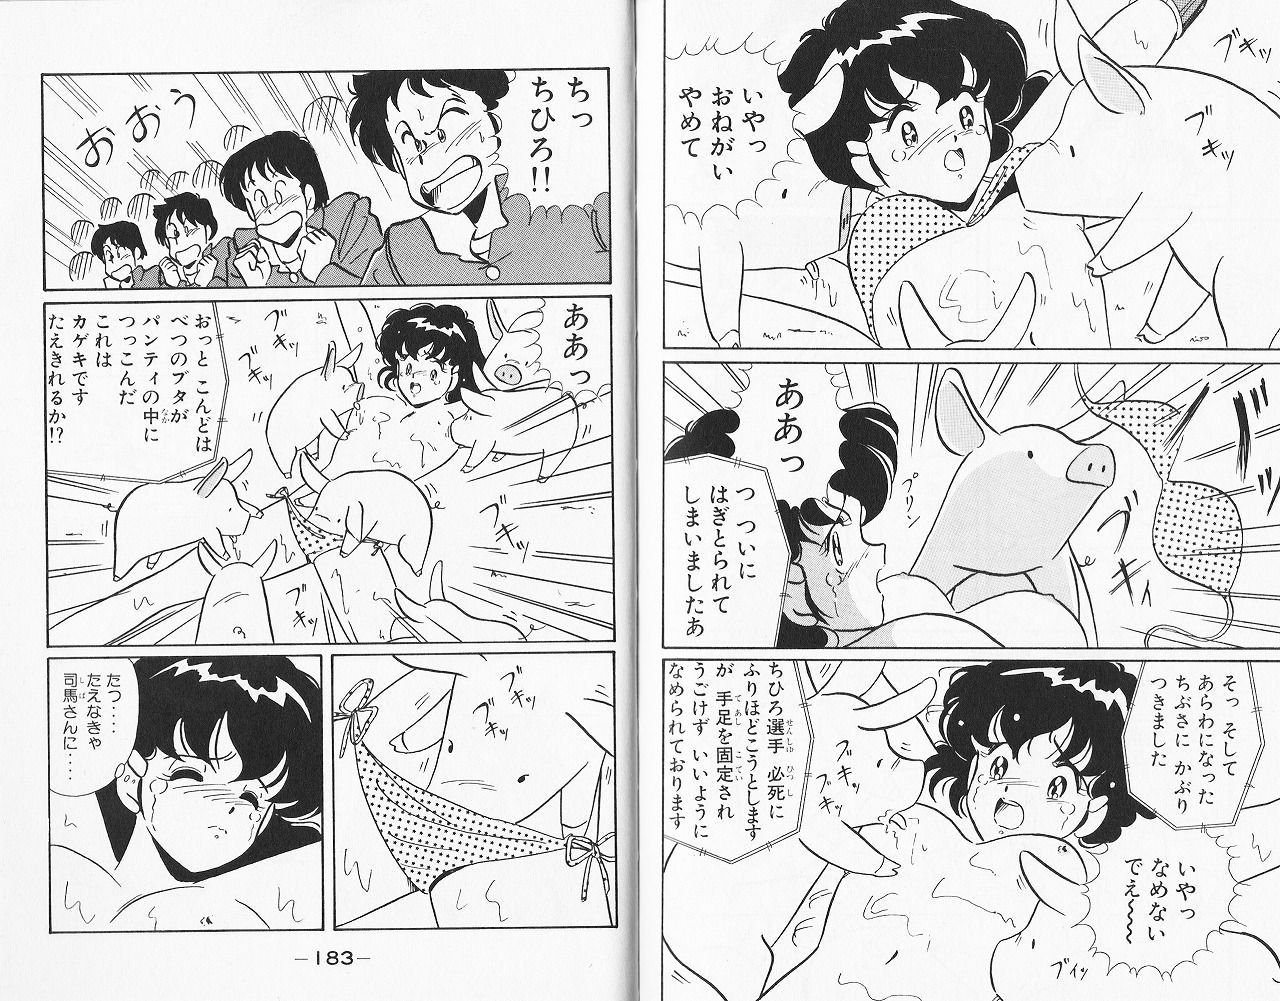 Showa wwwwwwwwww A manga in which teachers and boys try to forcibly take off the clothes of female students was serialized in a shonen magazine Showa wwwwwwwwww 15